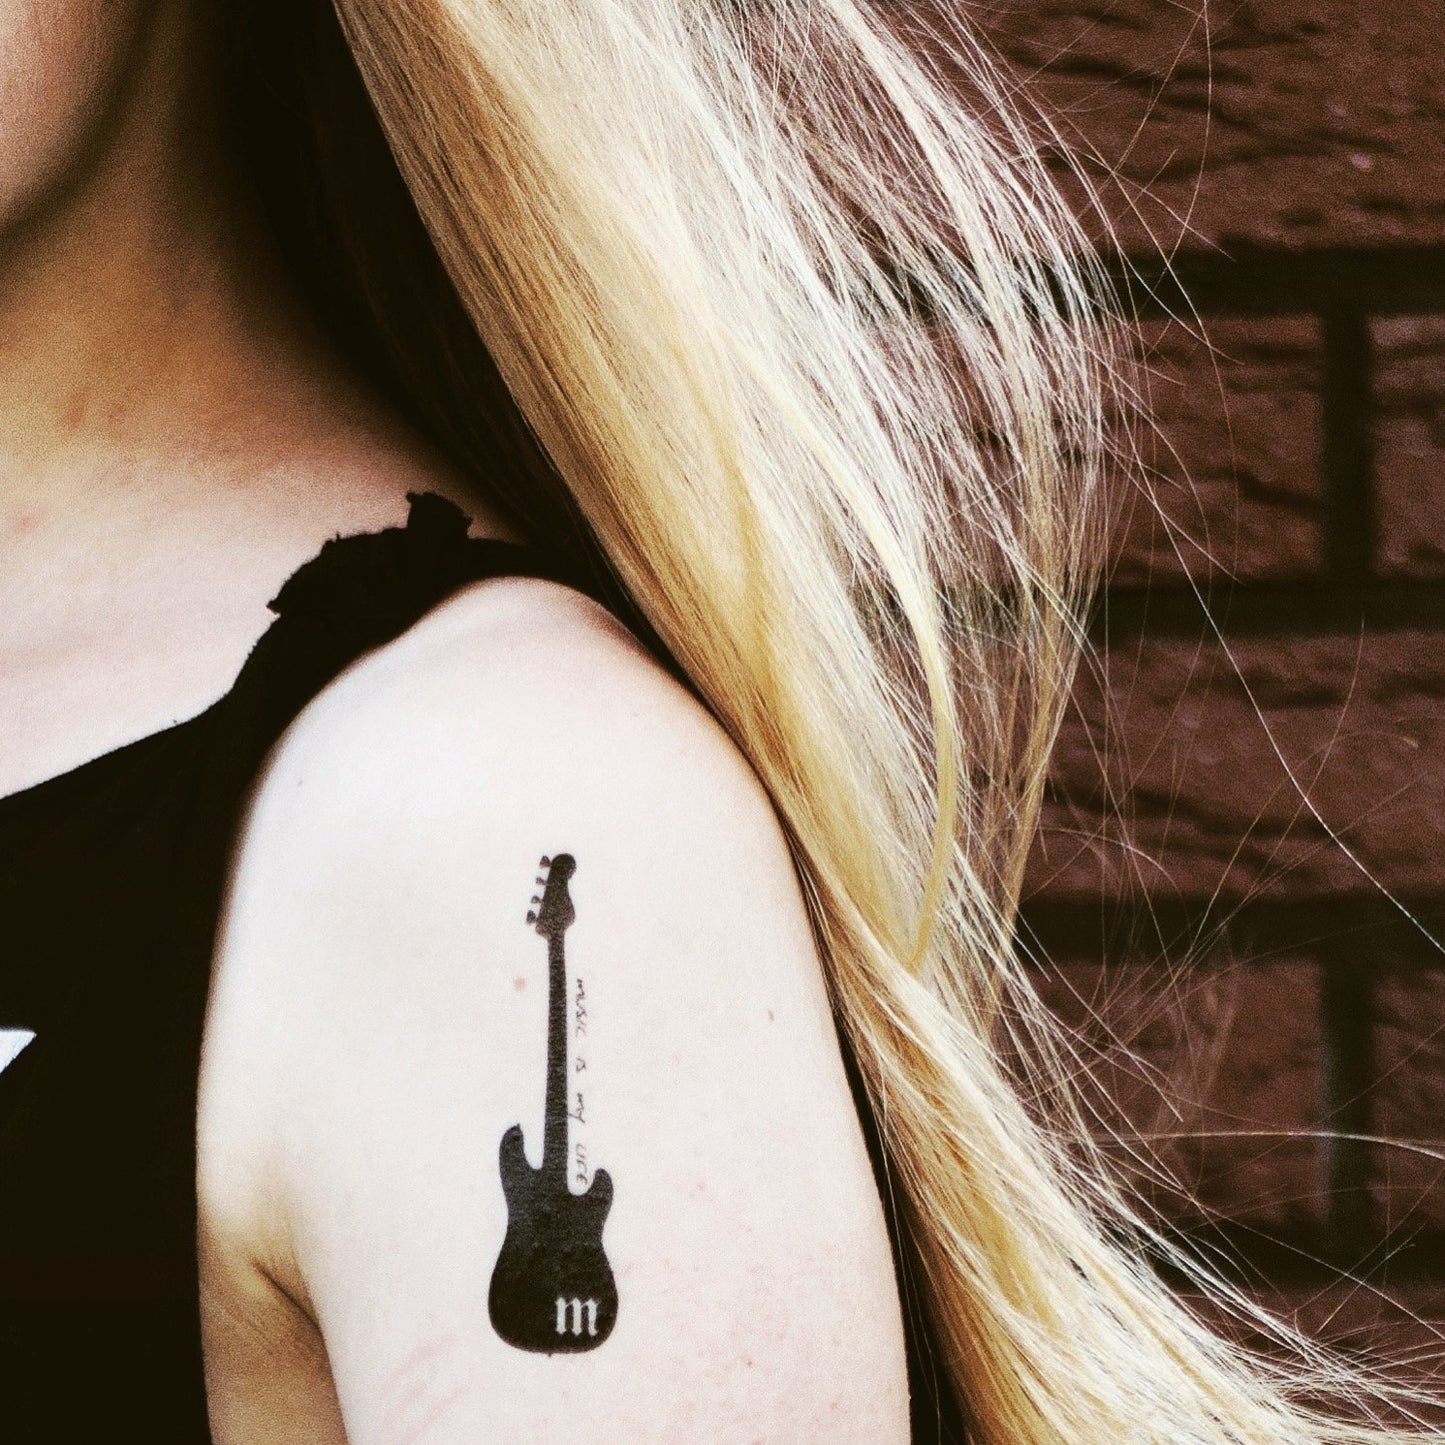 fake small classic rock music bass electric guitar temporary tattoo sticker design idea on upper arm